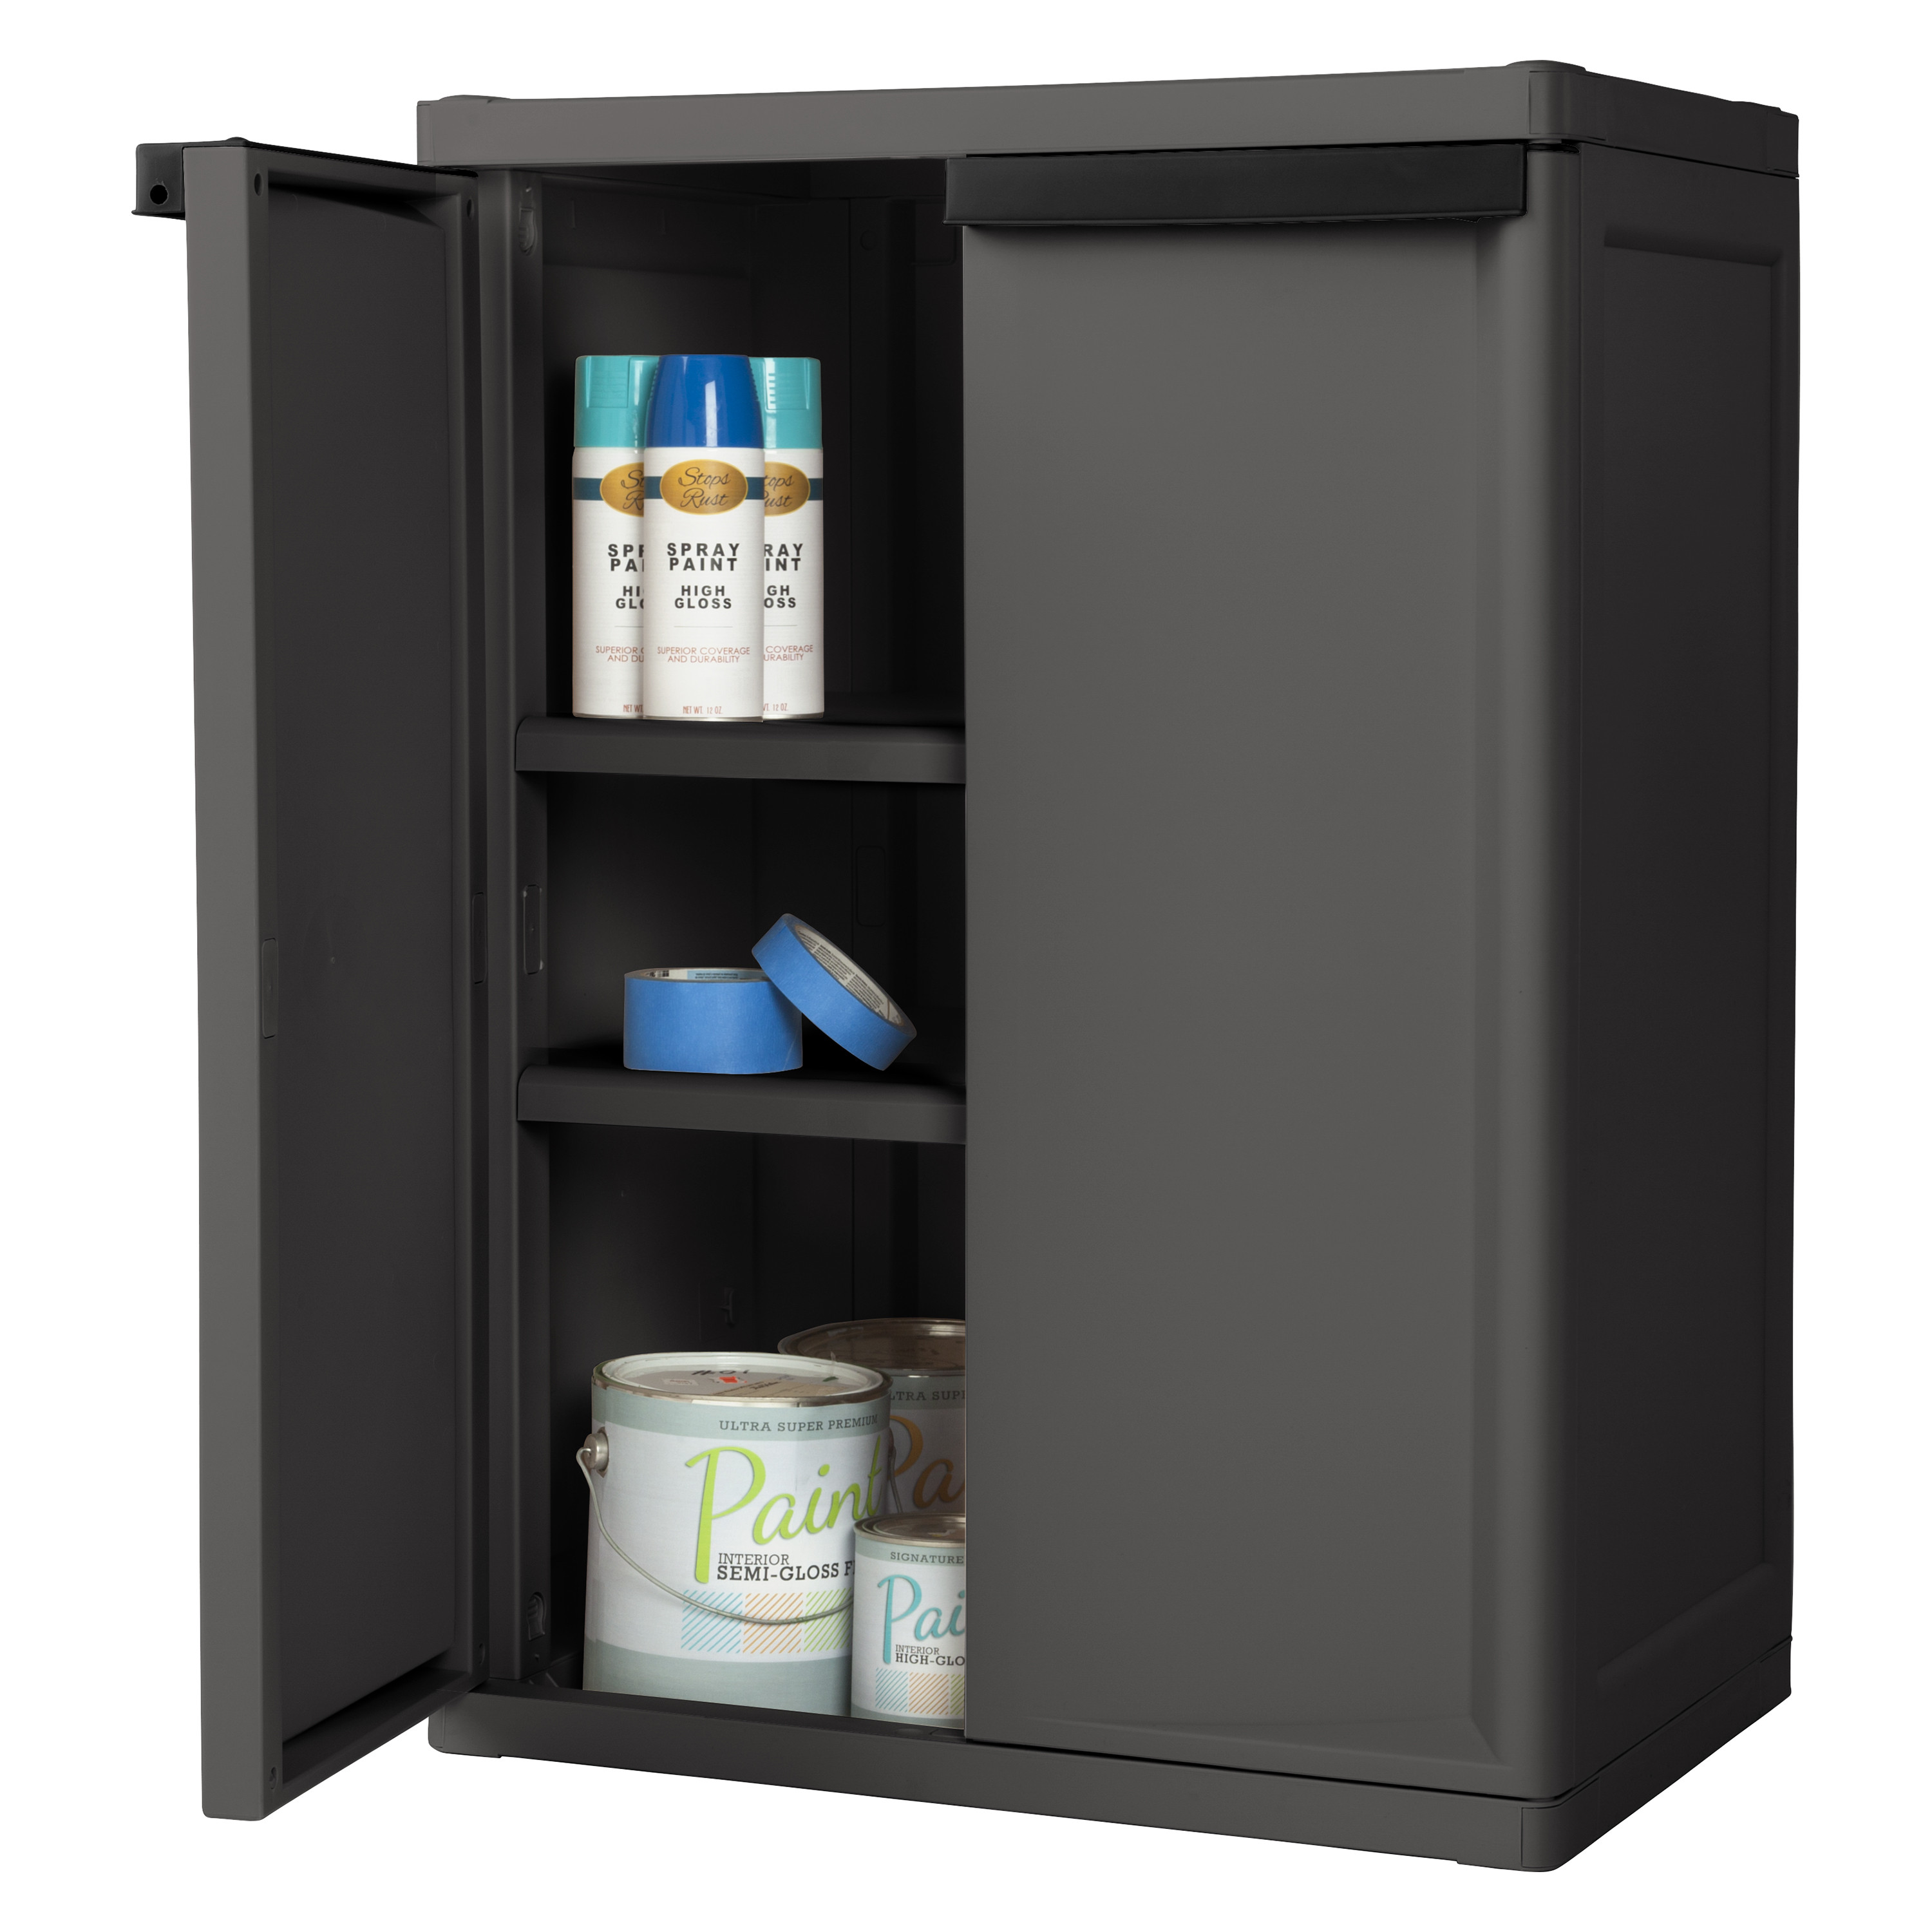 Best ideas about Sterilite 4 Shelf Cabinet
. Save or Pin Sterilite 2 Shelf Laundry Garage Utility Storage Cabinet Now.